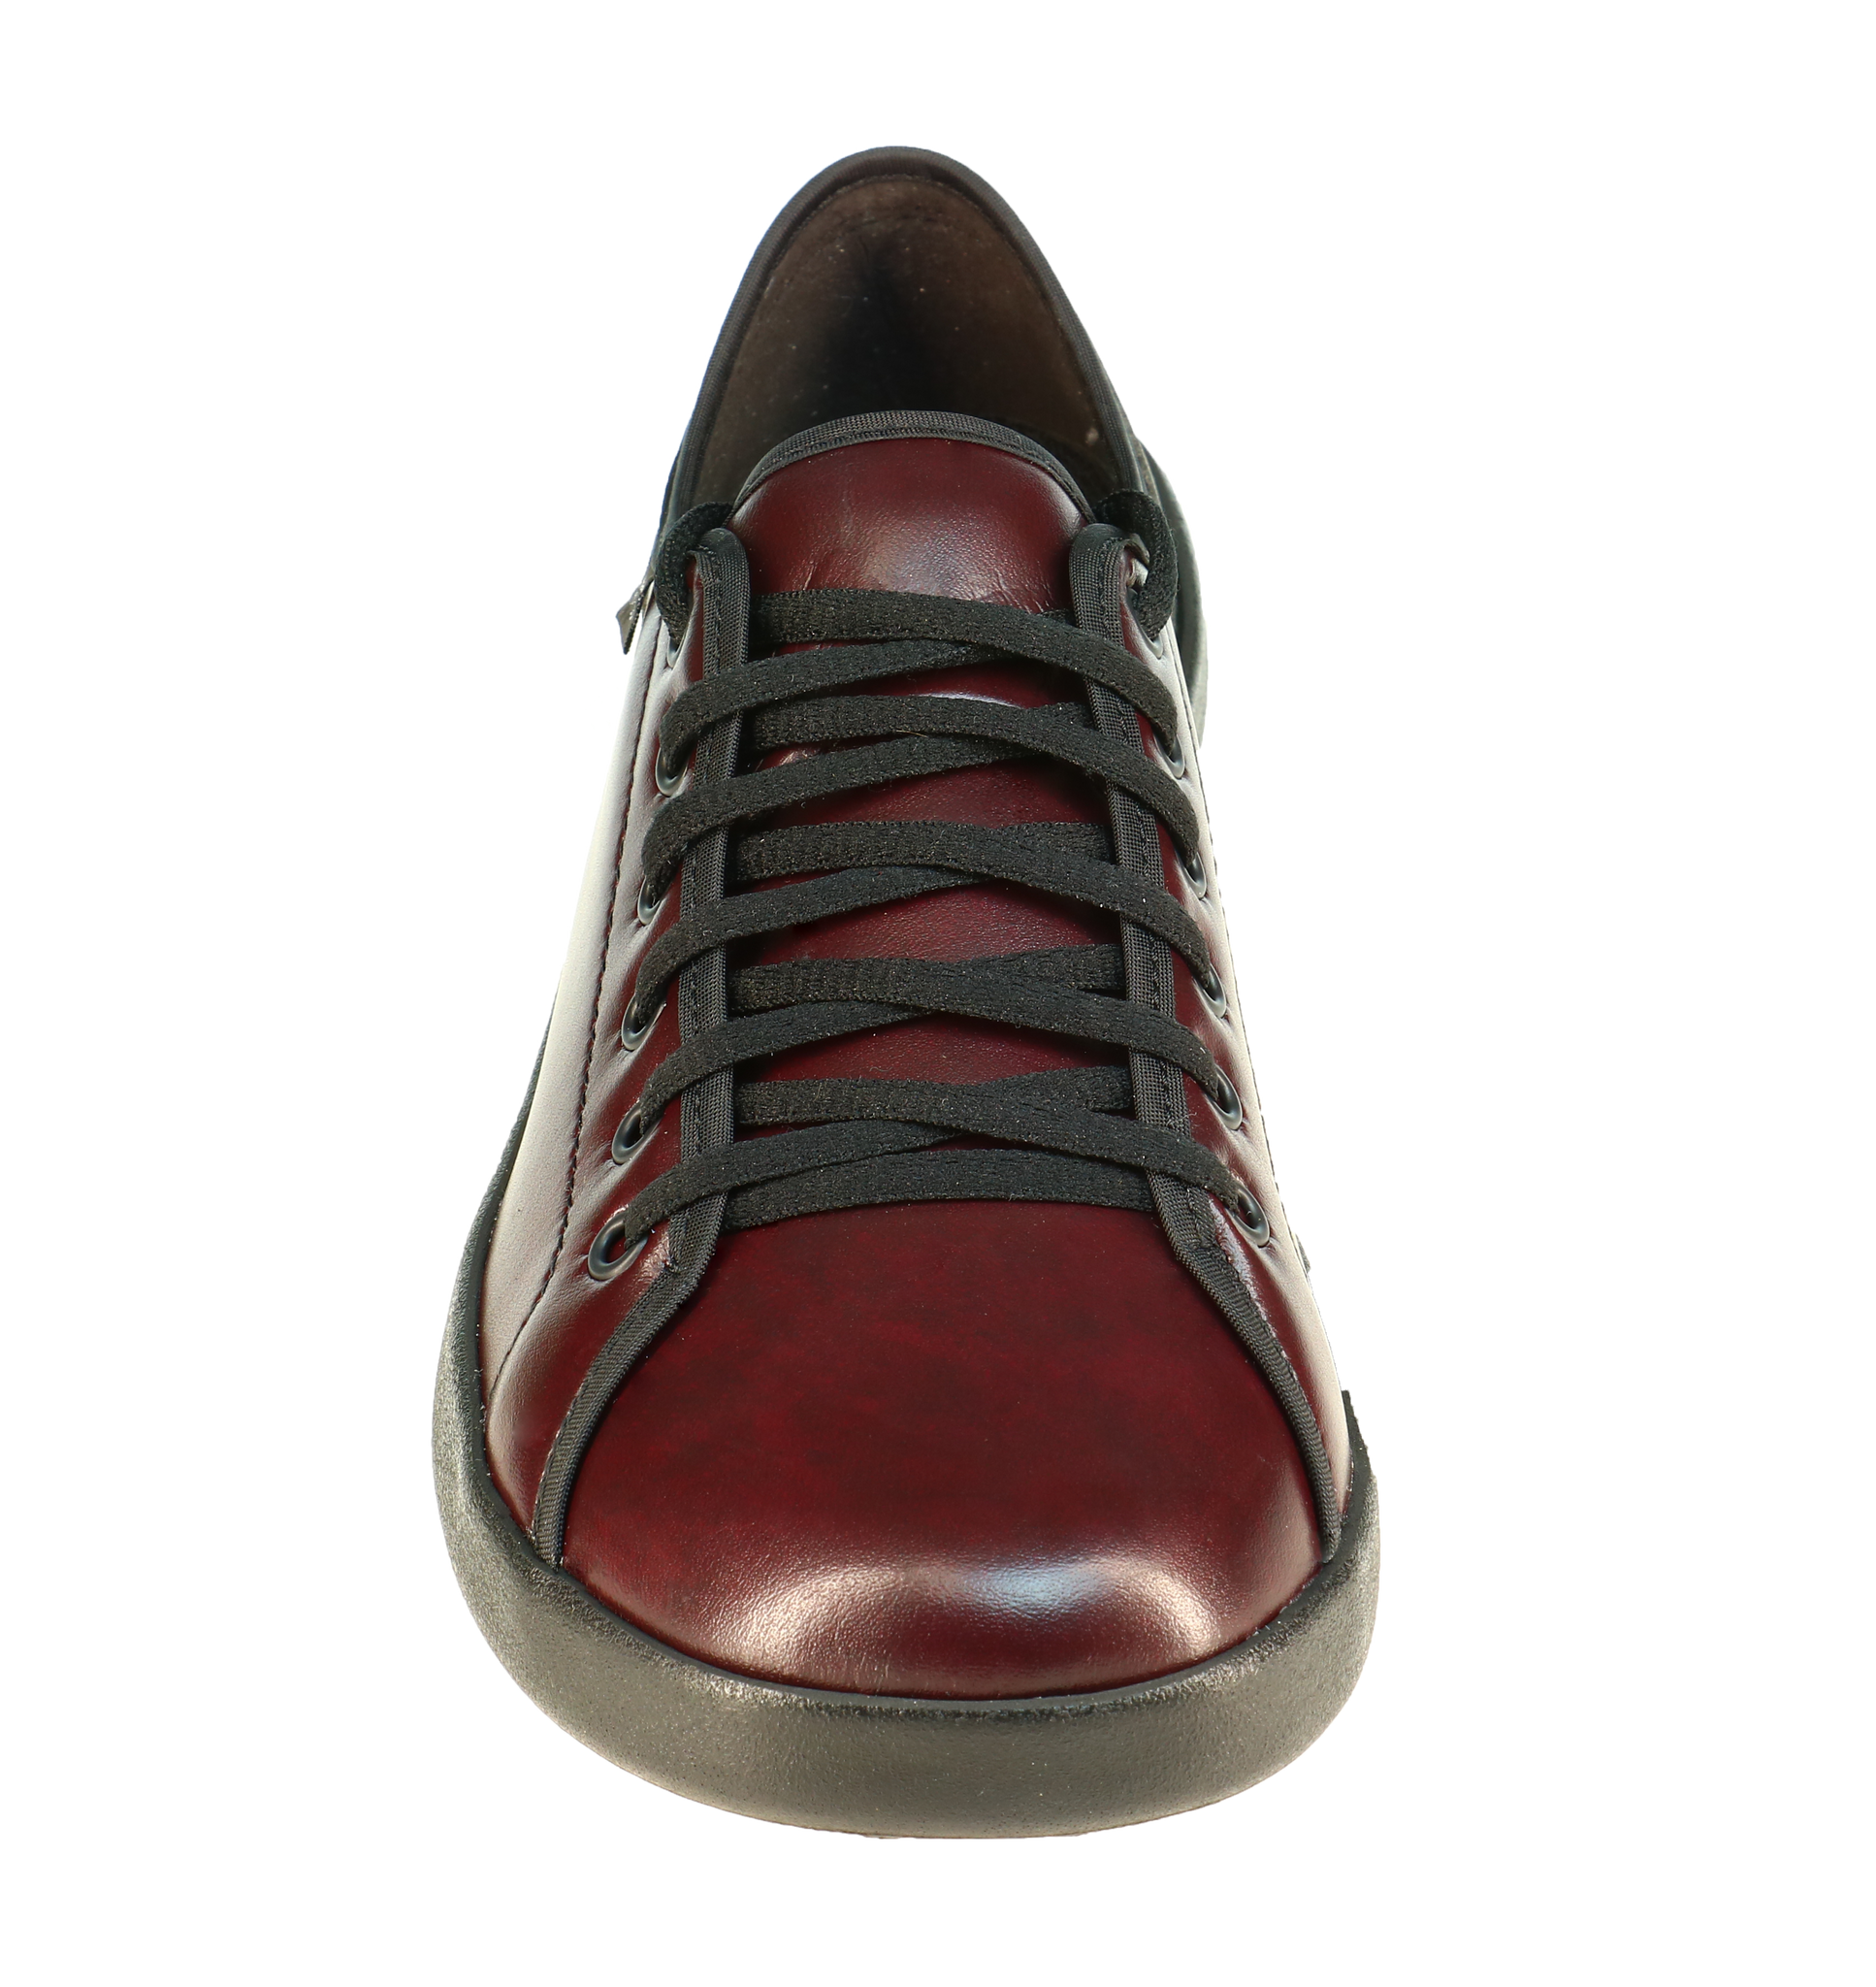 Urban Trekker in Burgundy - Zero Drop Casual Shoes - SOM Footwear – SOM  Sense Of Motion Footwear